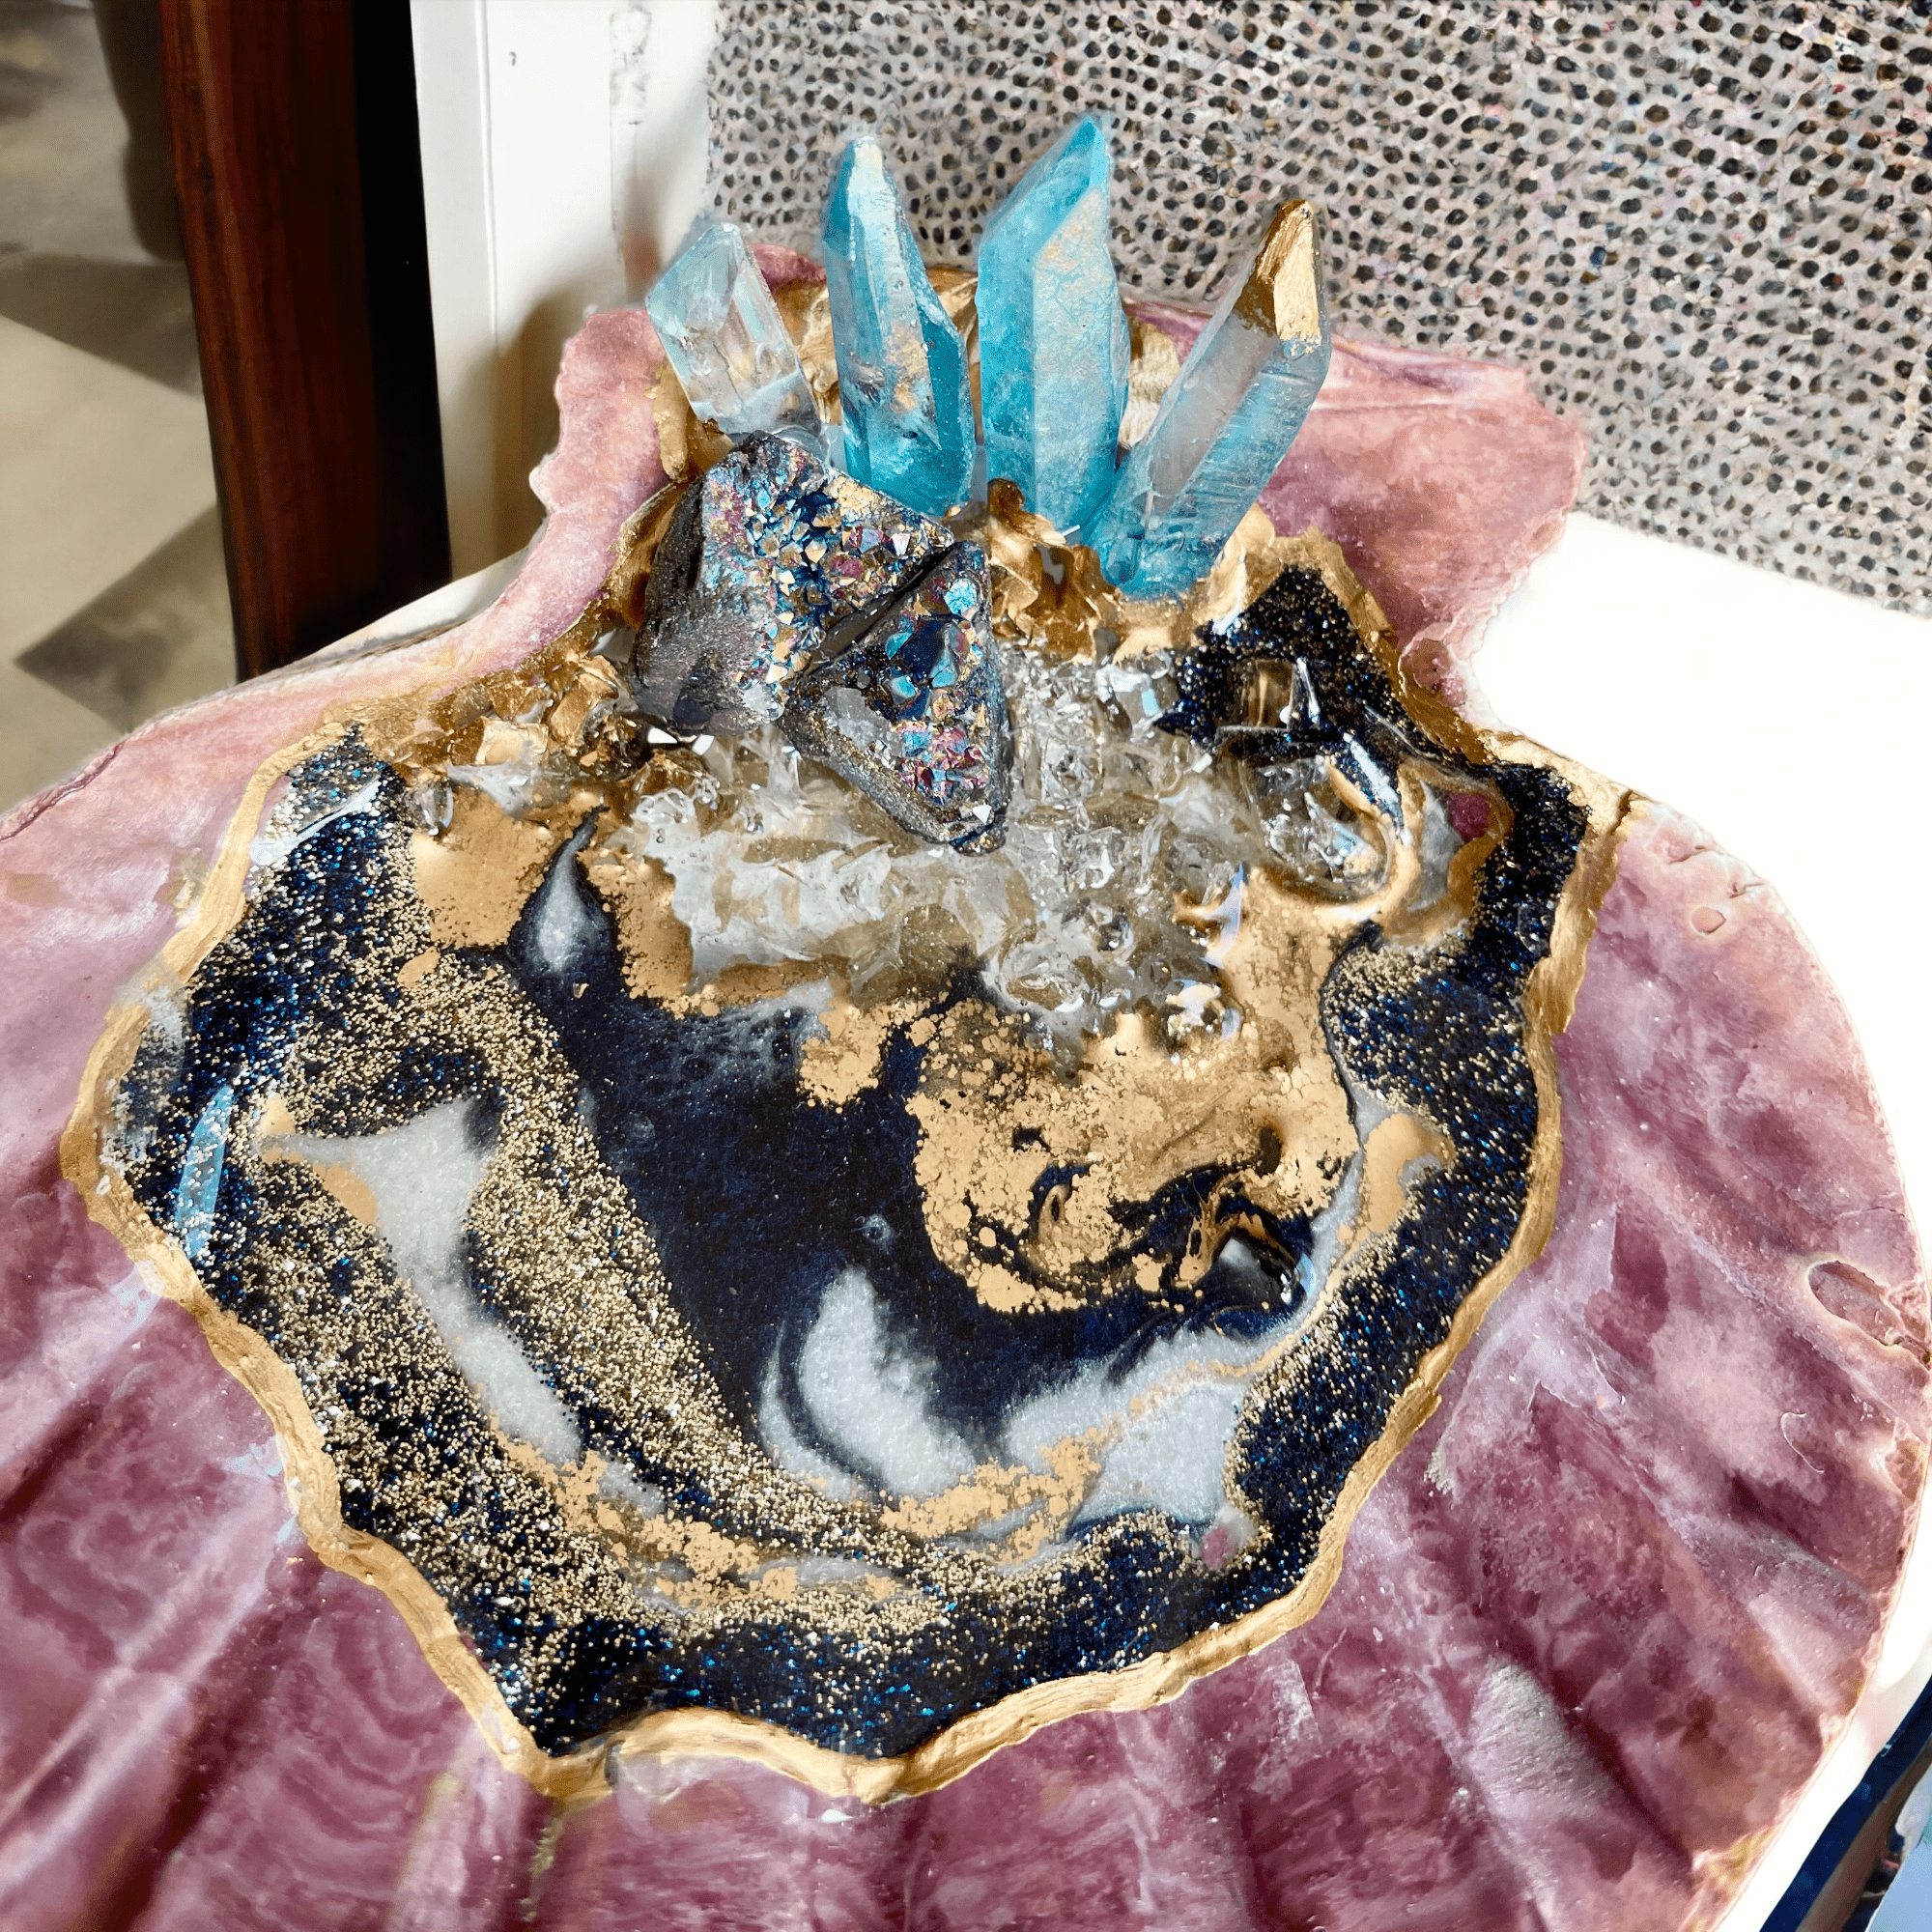 XL Lion's Paw Geode Resin Ring Dish - Iridescent Druzy & Blue Quartz - Pretty Crafty Lady Shop